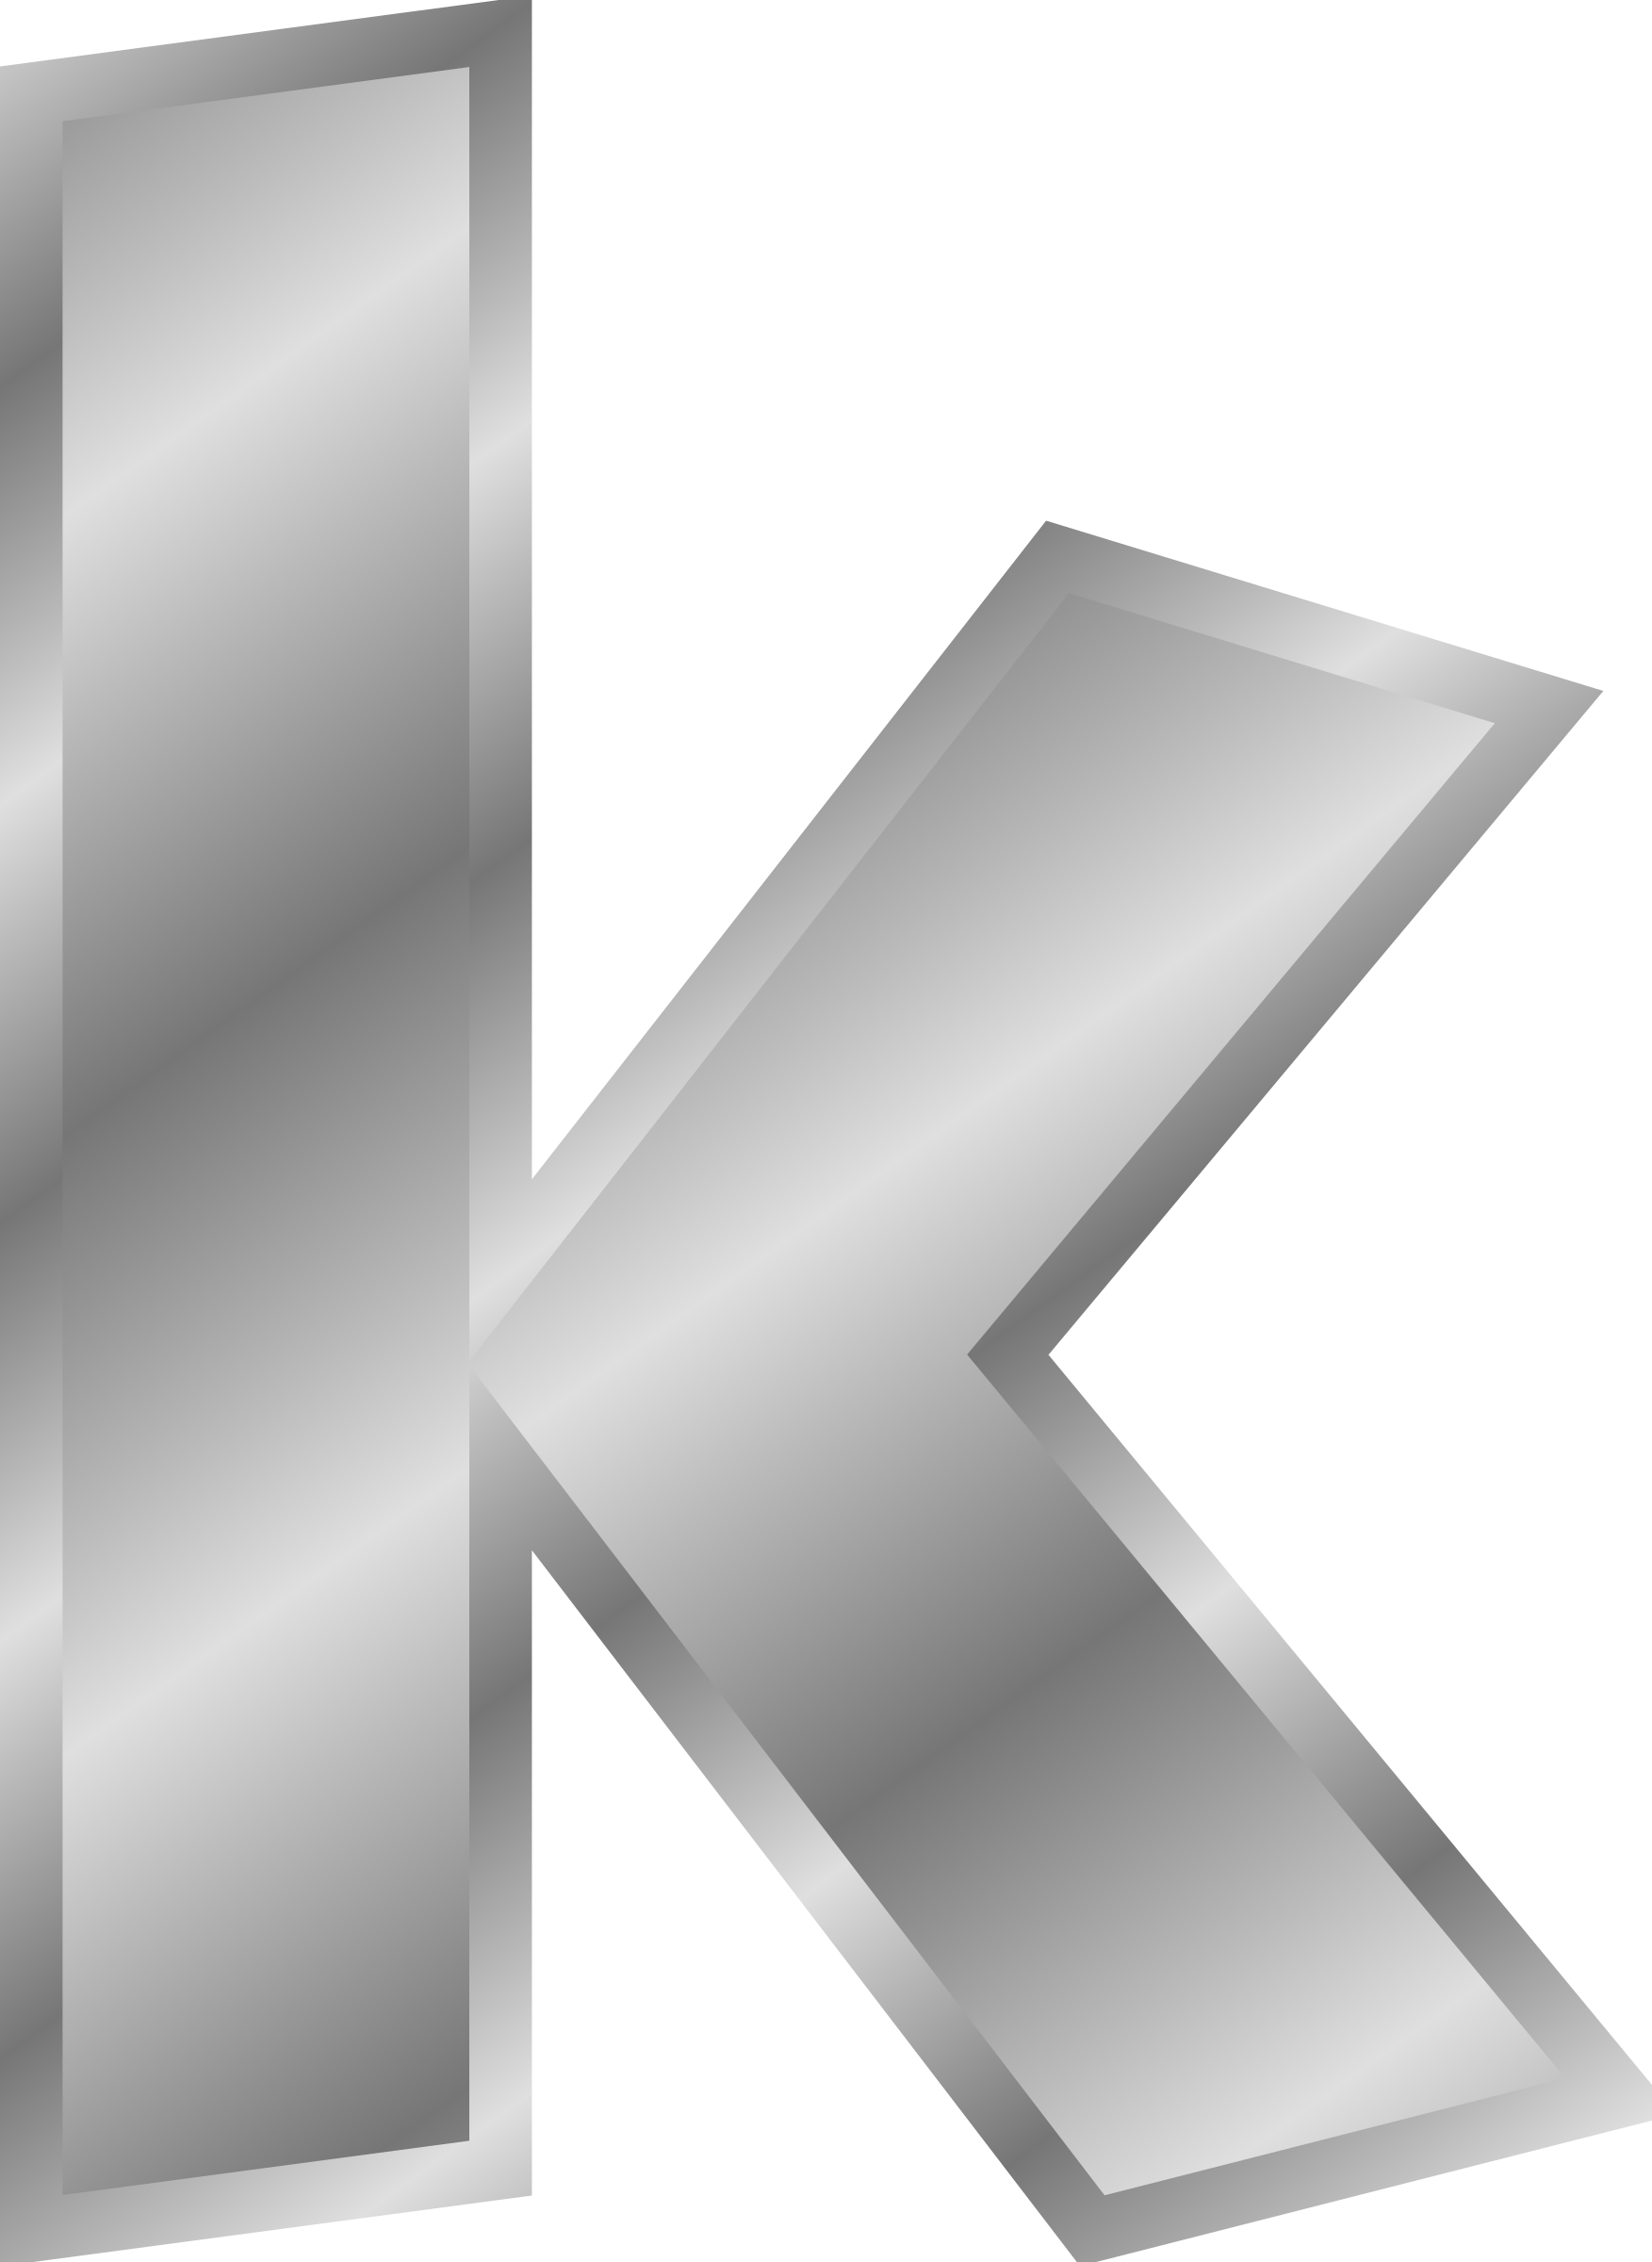 K latar belakang huruf k